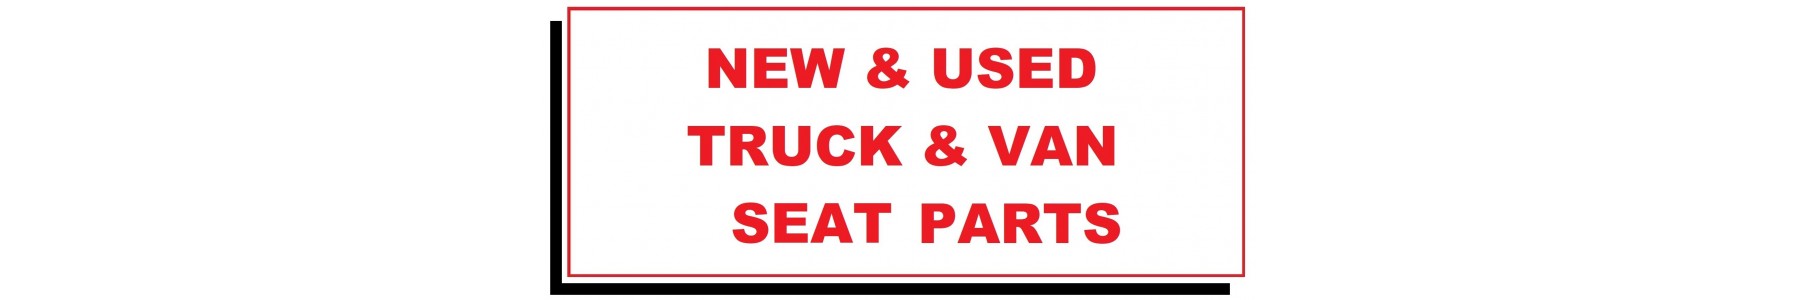 NEW & USED VAN SEAT PARTS